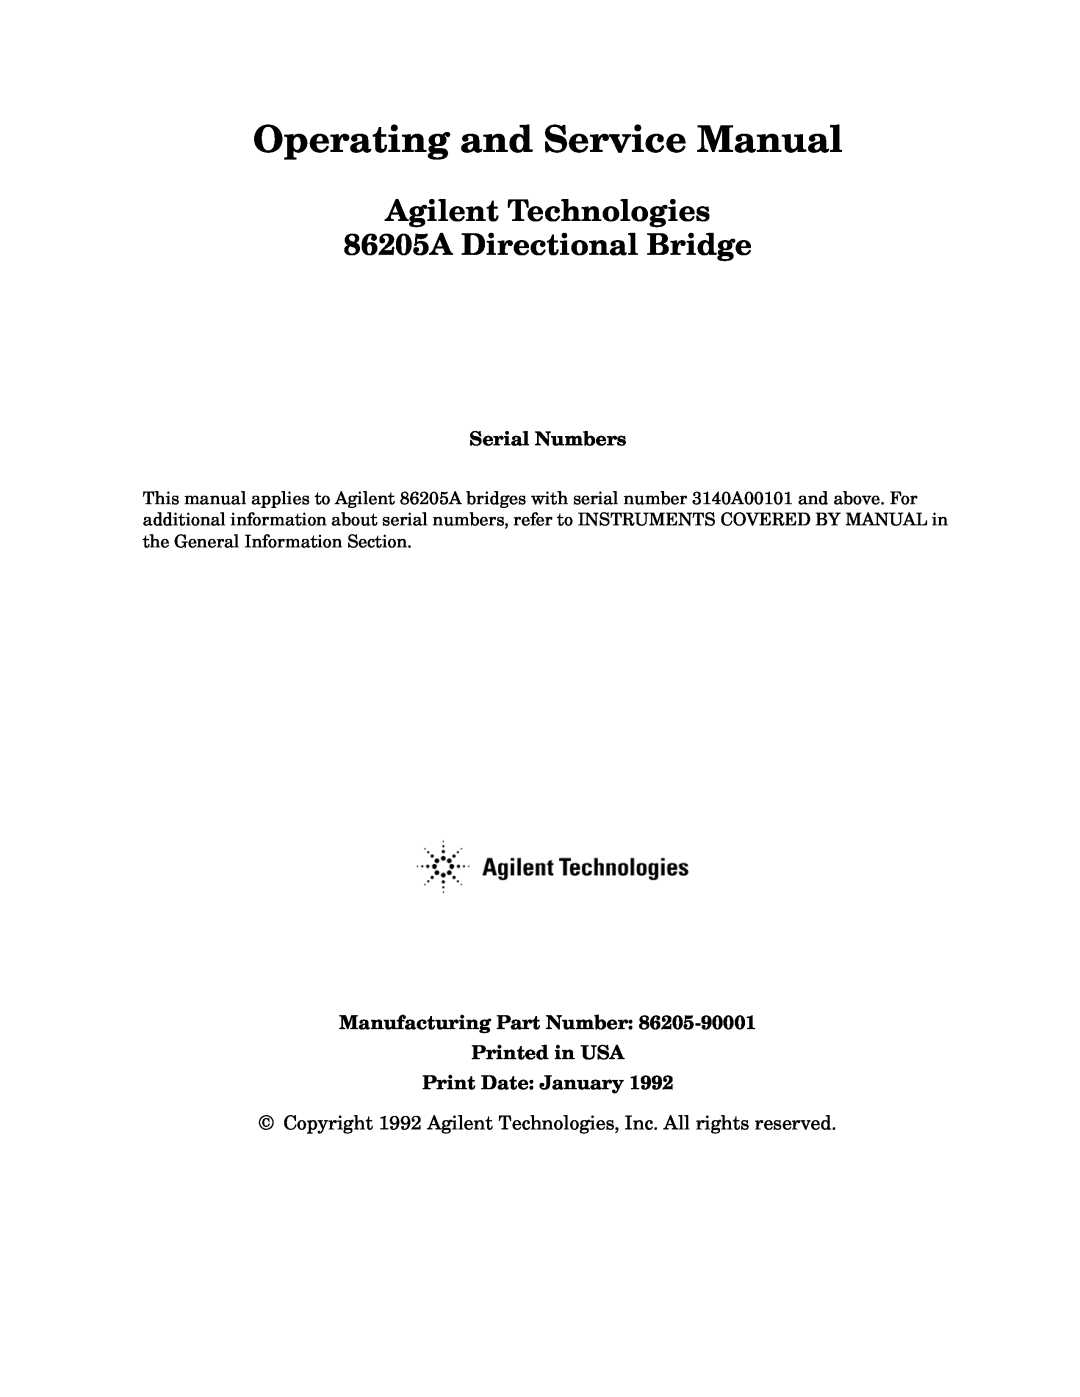 Agilent Technologies service manual Agilent Technologies 86205A Directional Bridge, Operating and Service Manual 